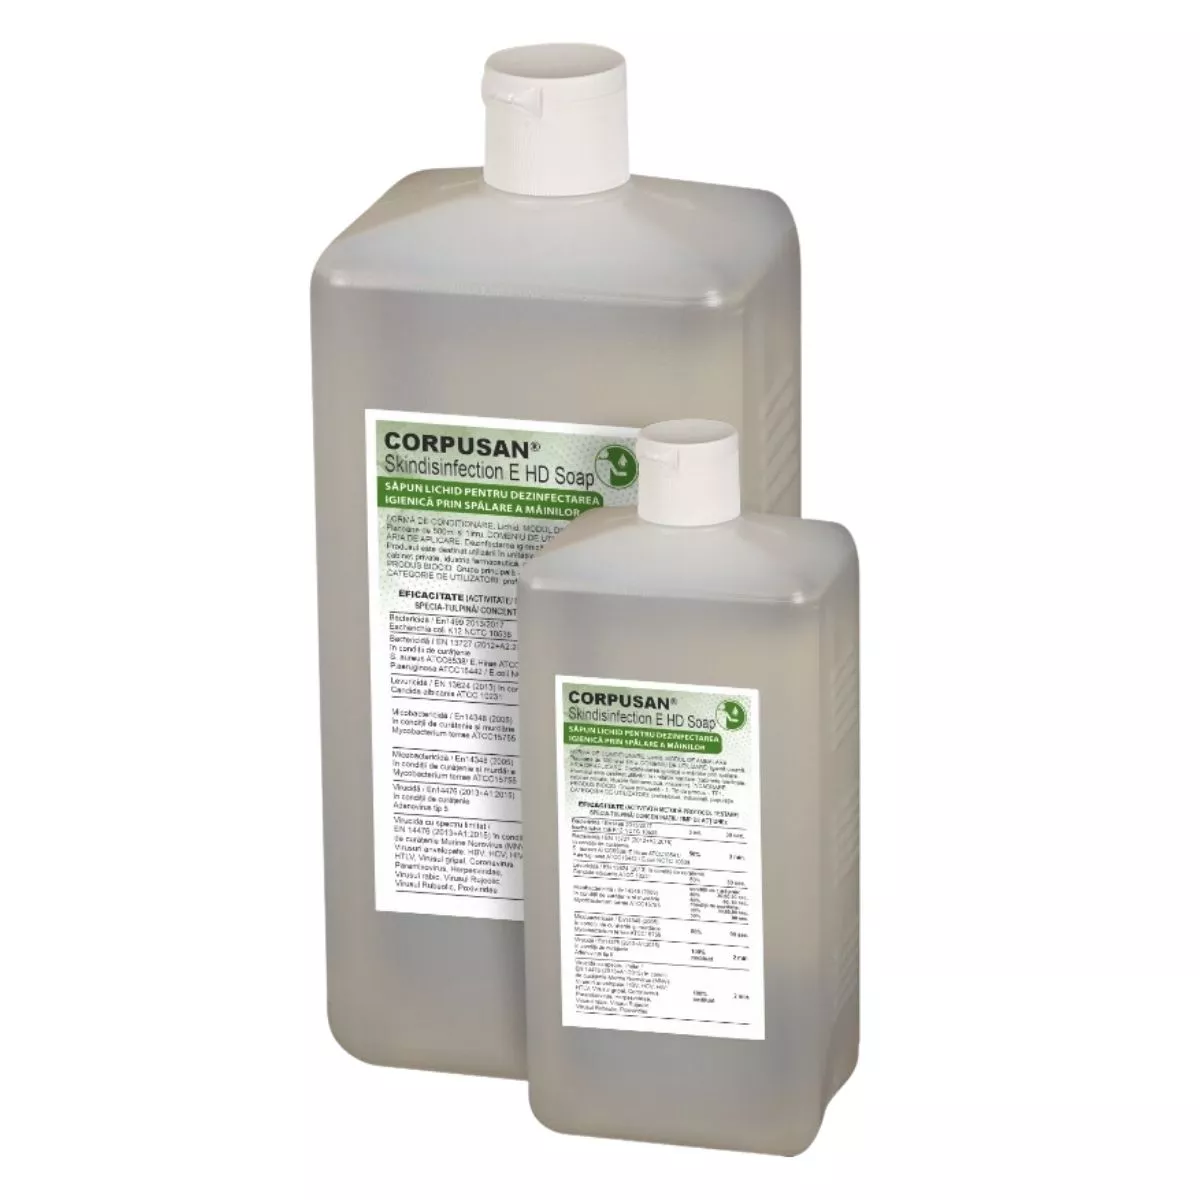 CORPUSAN SKINDISINFECTION E HD SOAP, sapun lichid dezinfectant, 1 litru 1